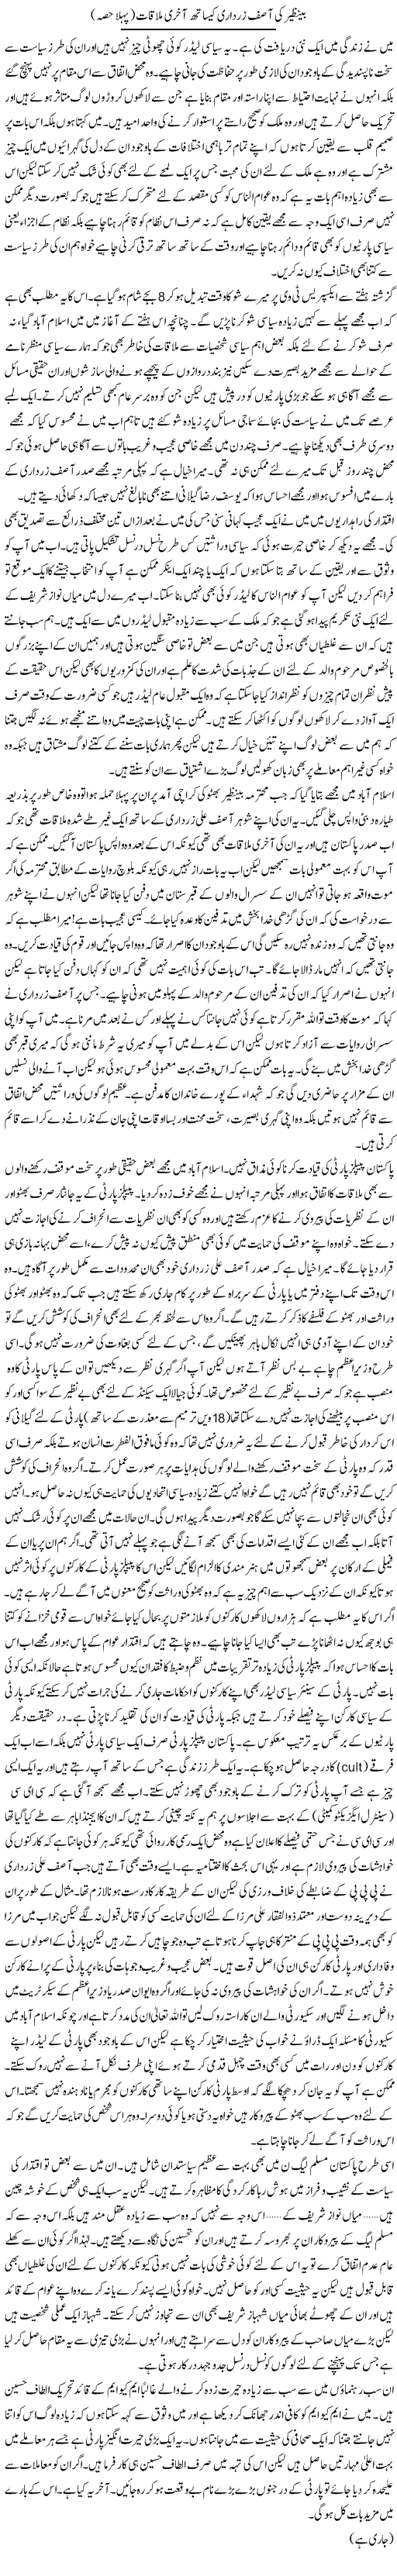 Benazir Zardari Express Column Mubashir Luqman 23 July 2010